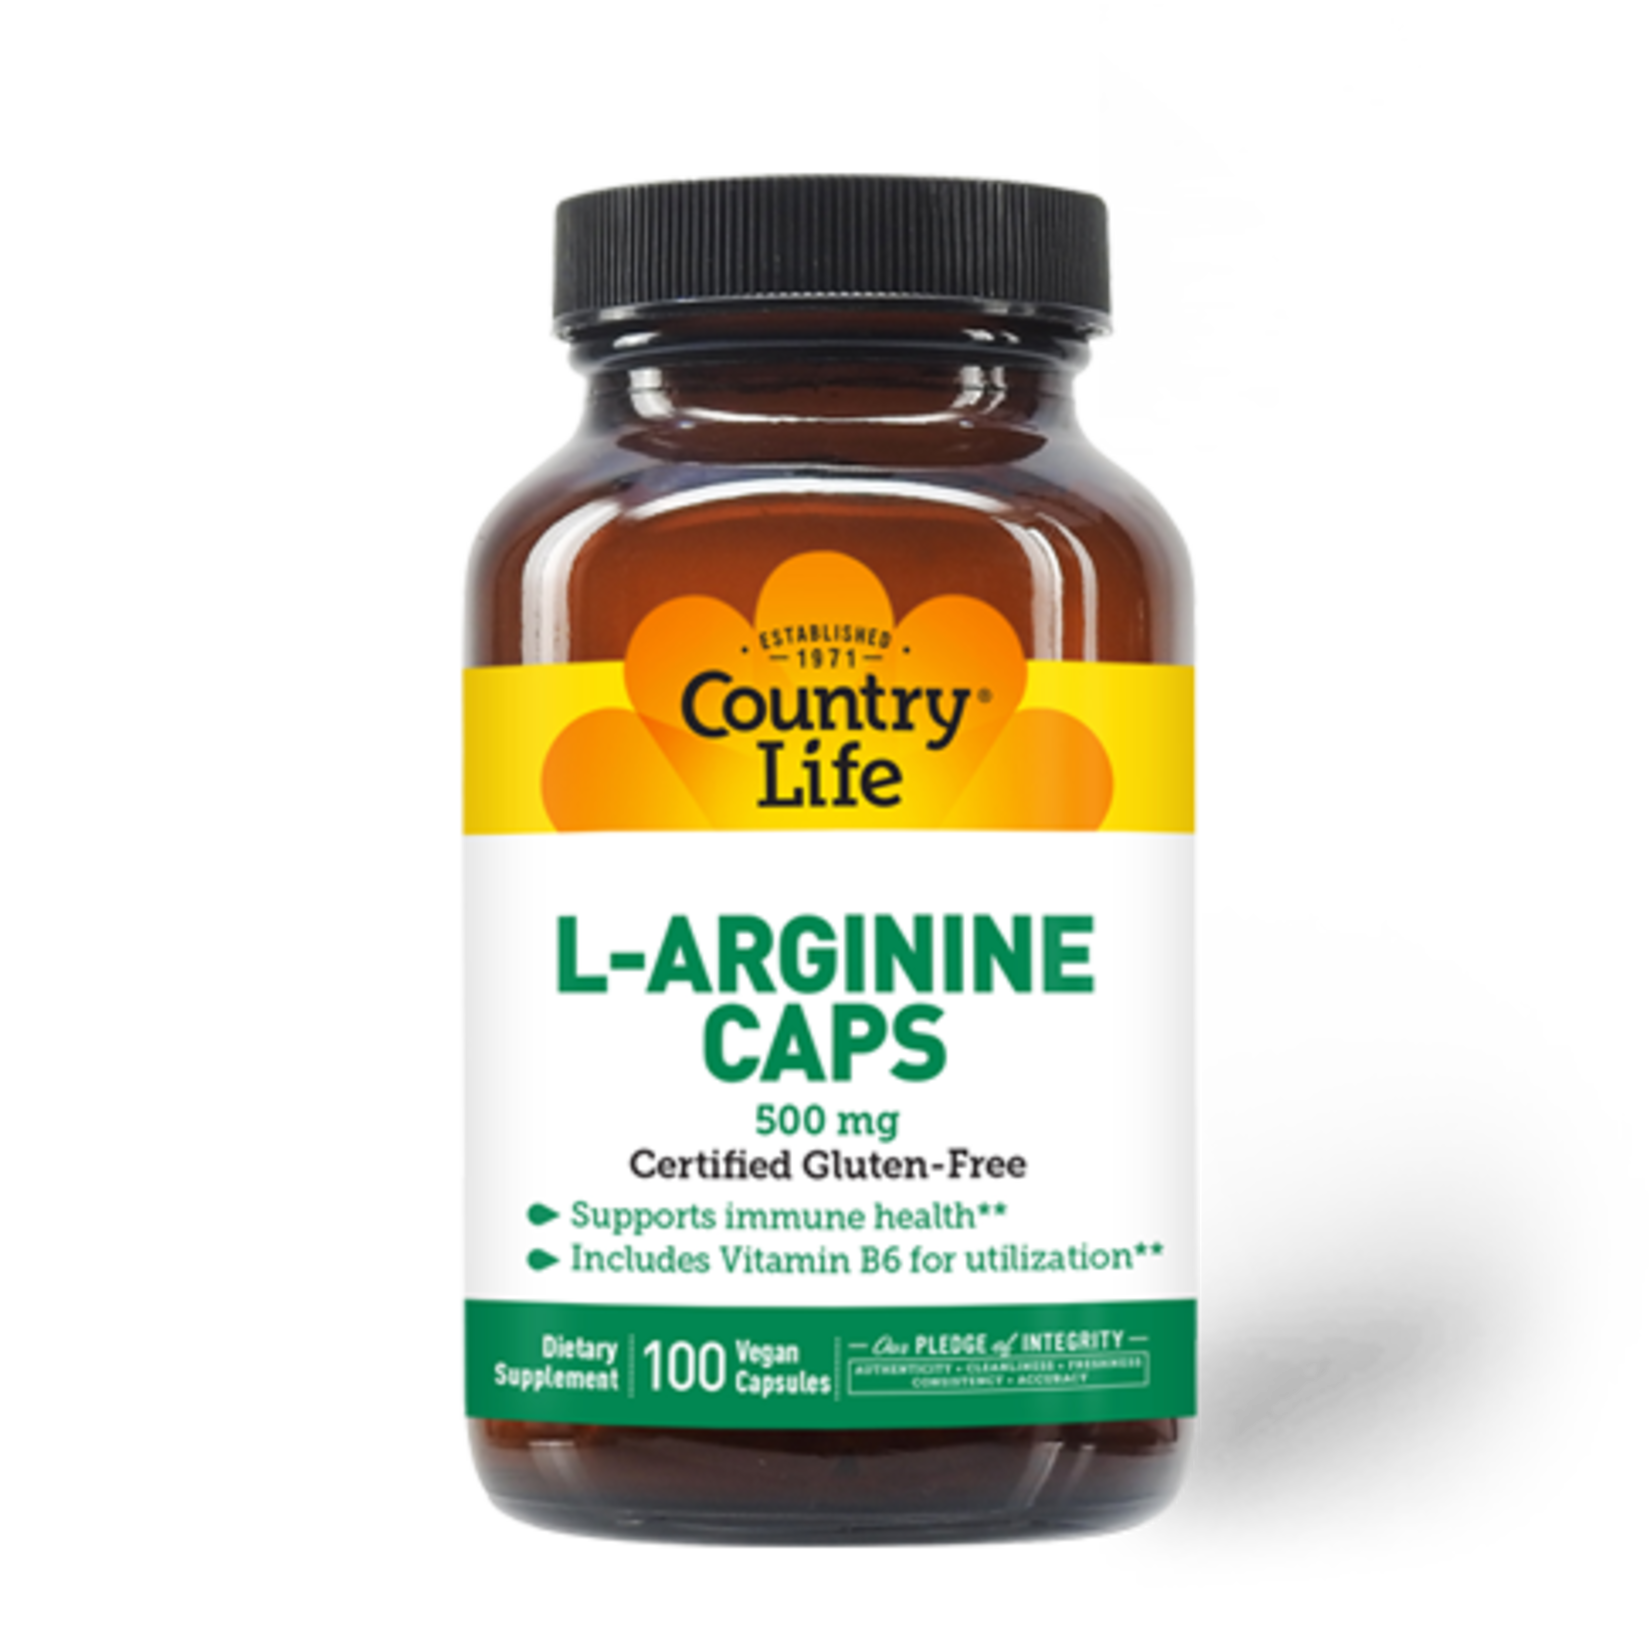 Country Life Country Life - L Arginine Caps 500 mg - 100 Veg Capsules